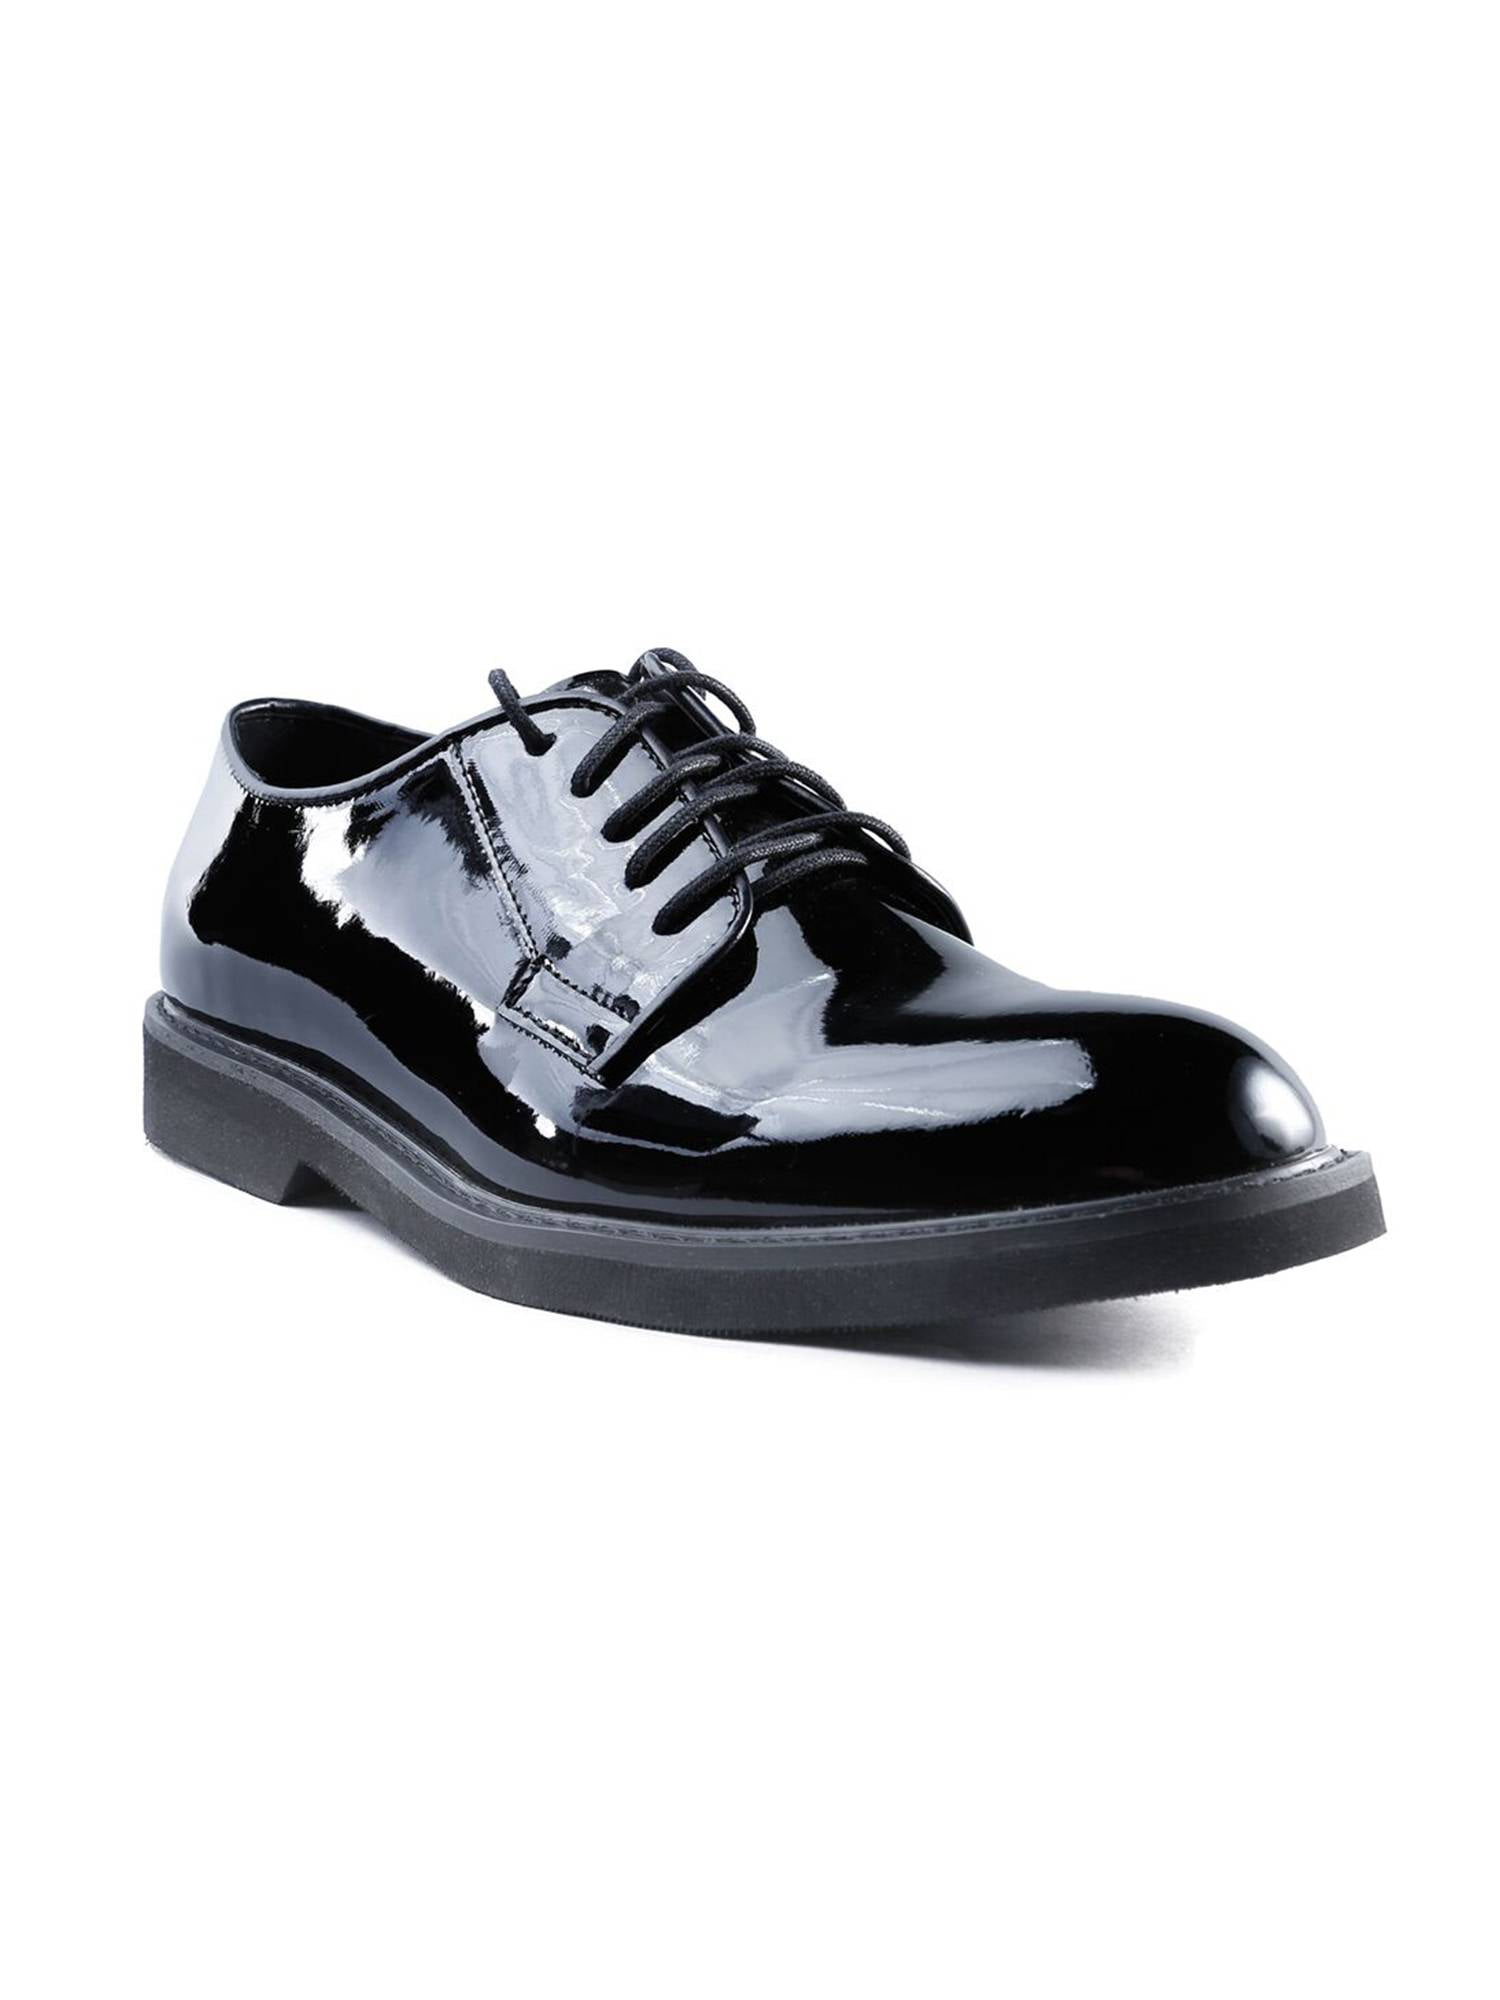 Ridge Footwear 7001 Men's Uniform Oxford Lite High-Gloss Boots - Size 8 ...